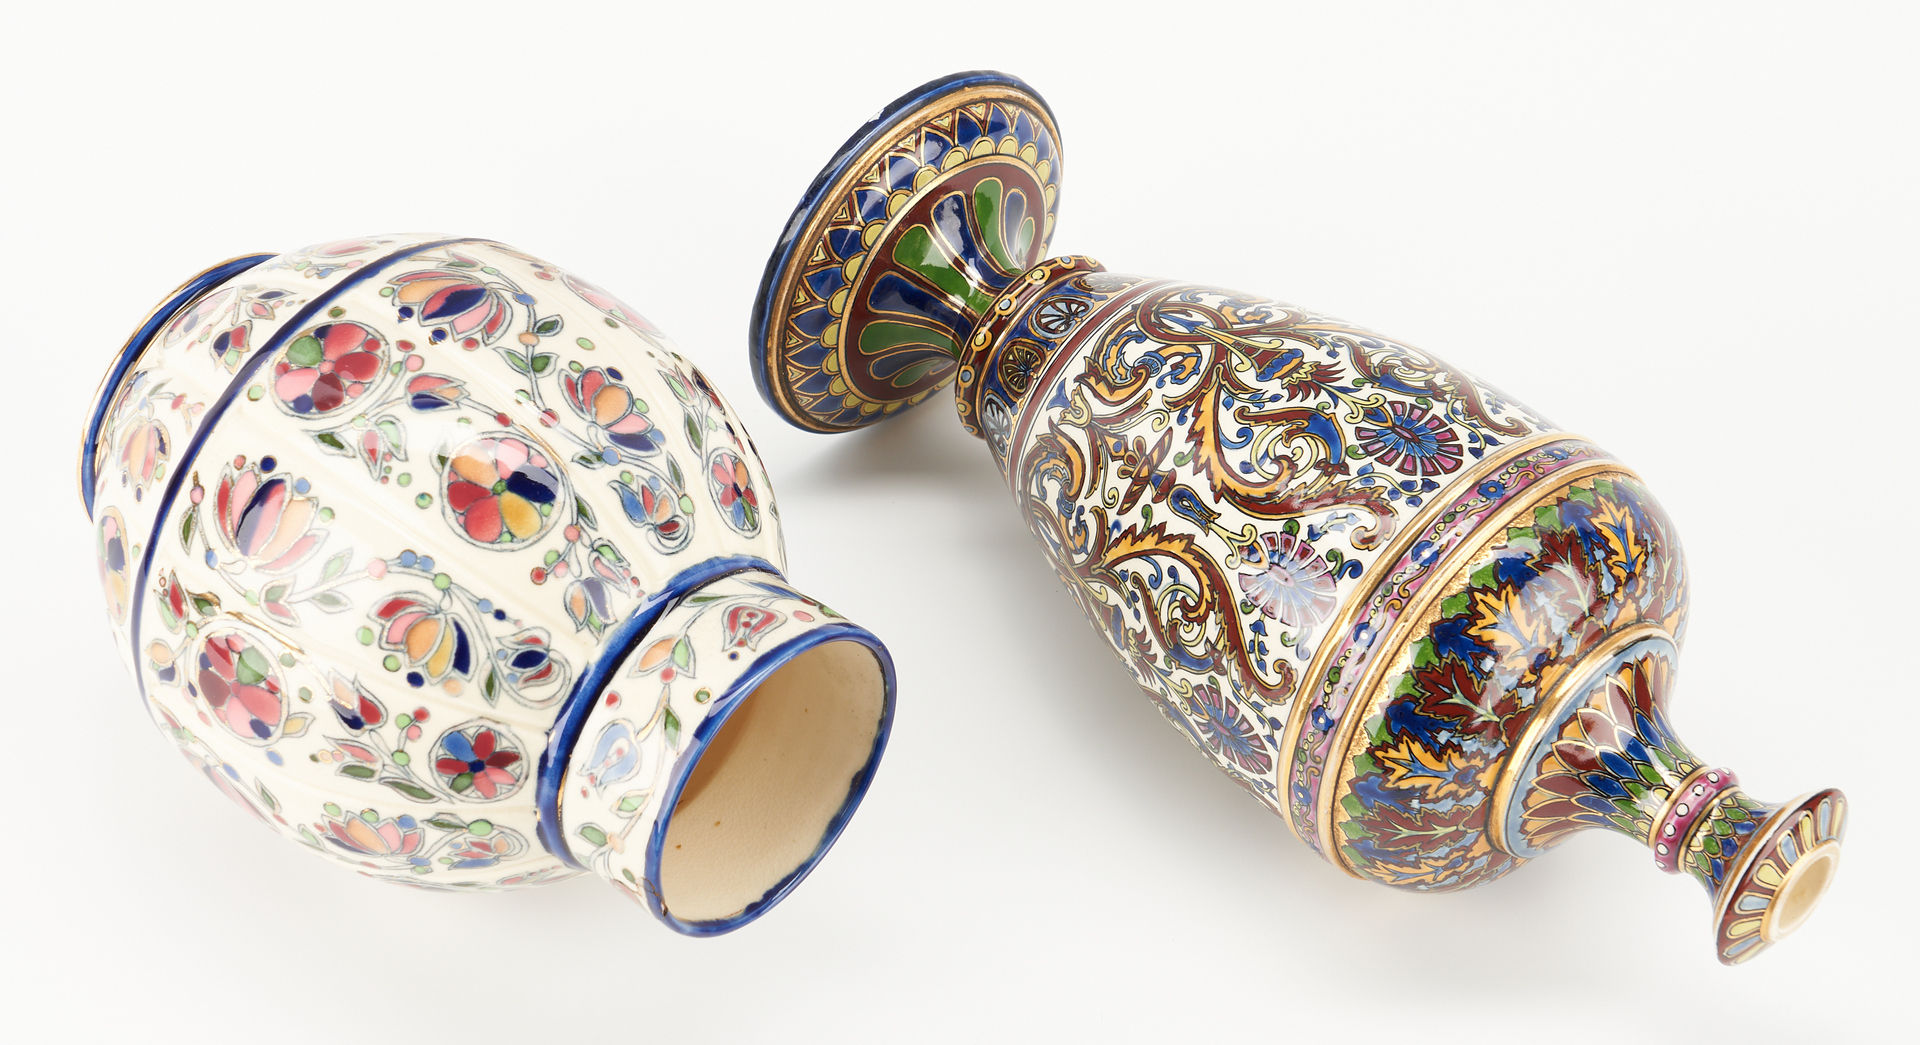 Lot 256: Pair of Hungarian Porcelain Vases